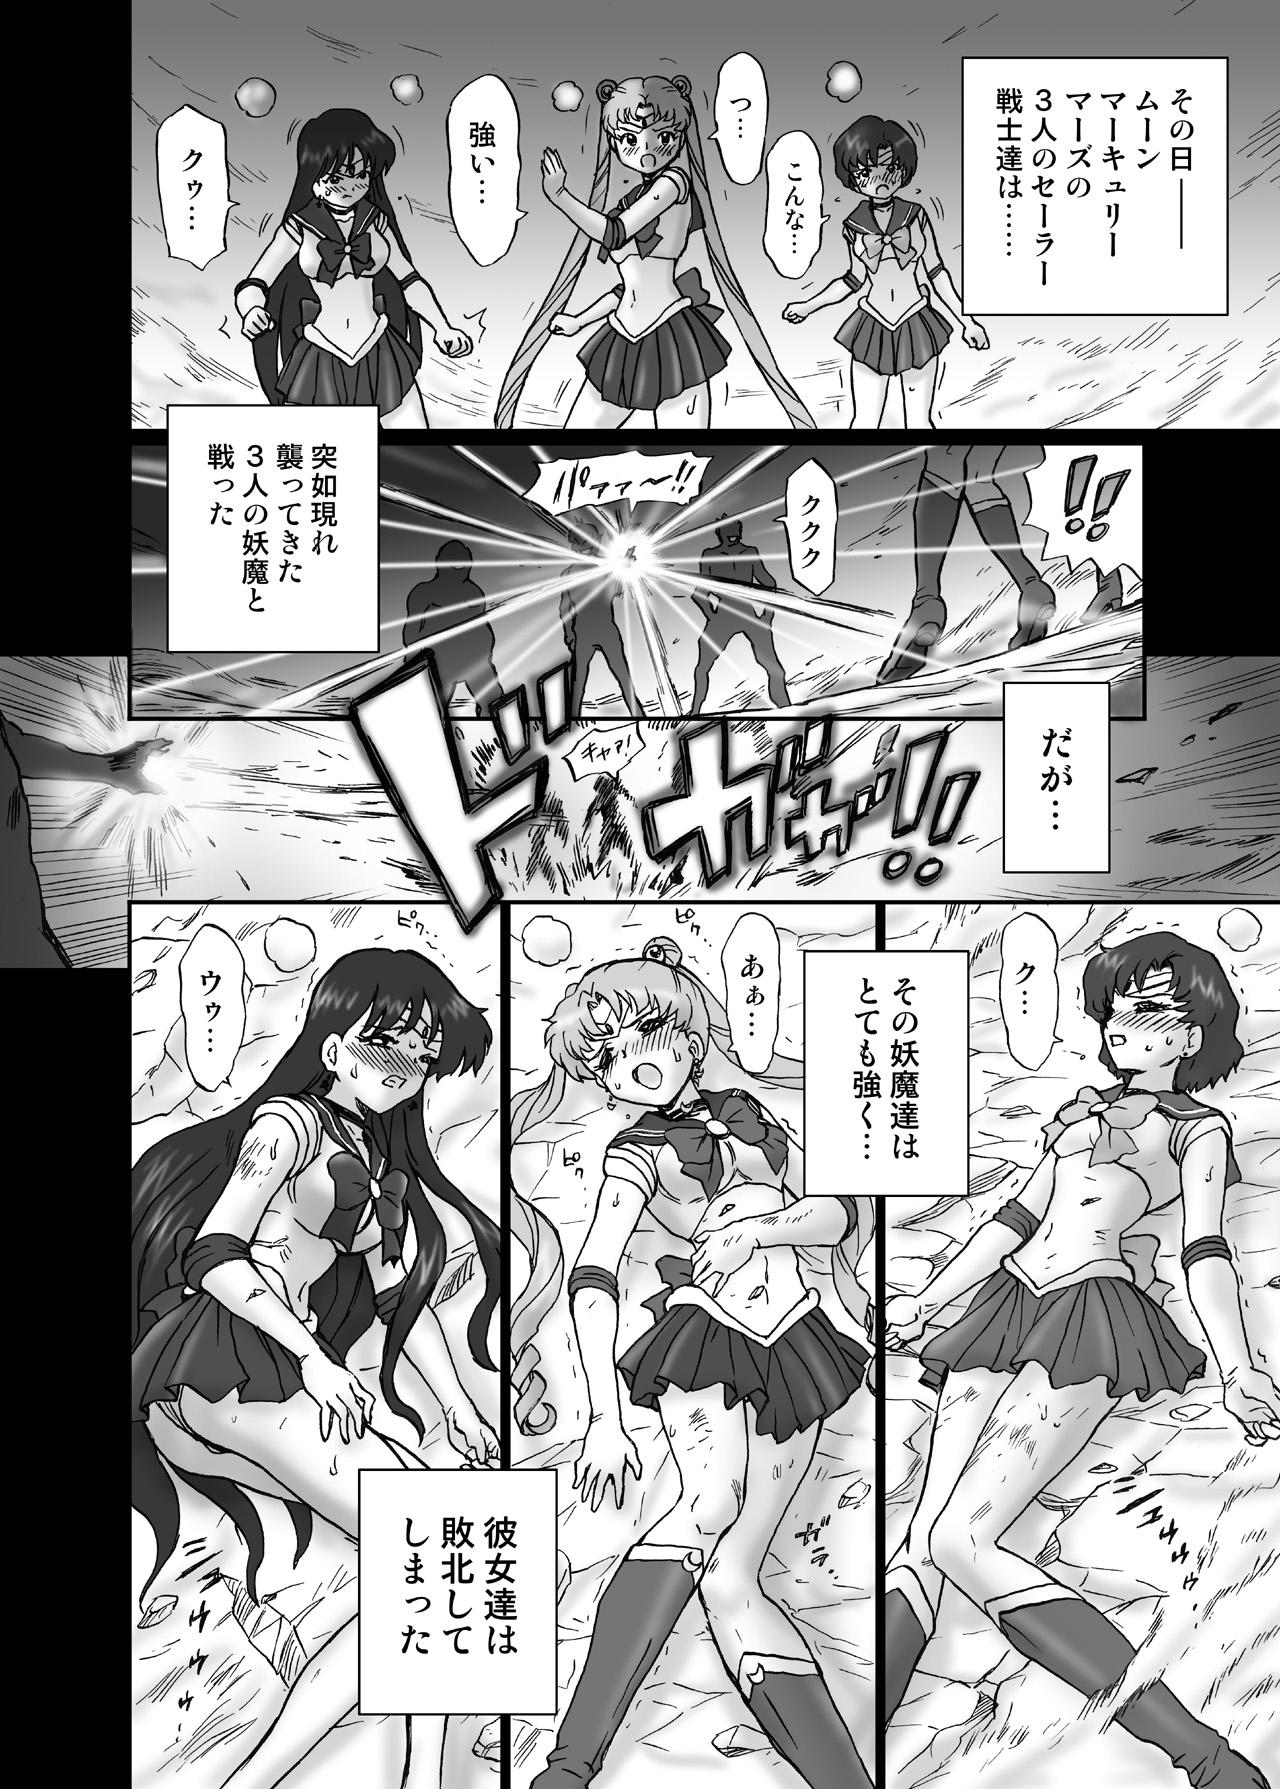 Soapy IRIE YAMAZAKI "Sailor Moon" Anal & Scatolo Sakuhinshuu Ver. 1 - Sailor moon Corno - Page 3